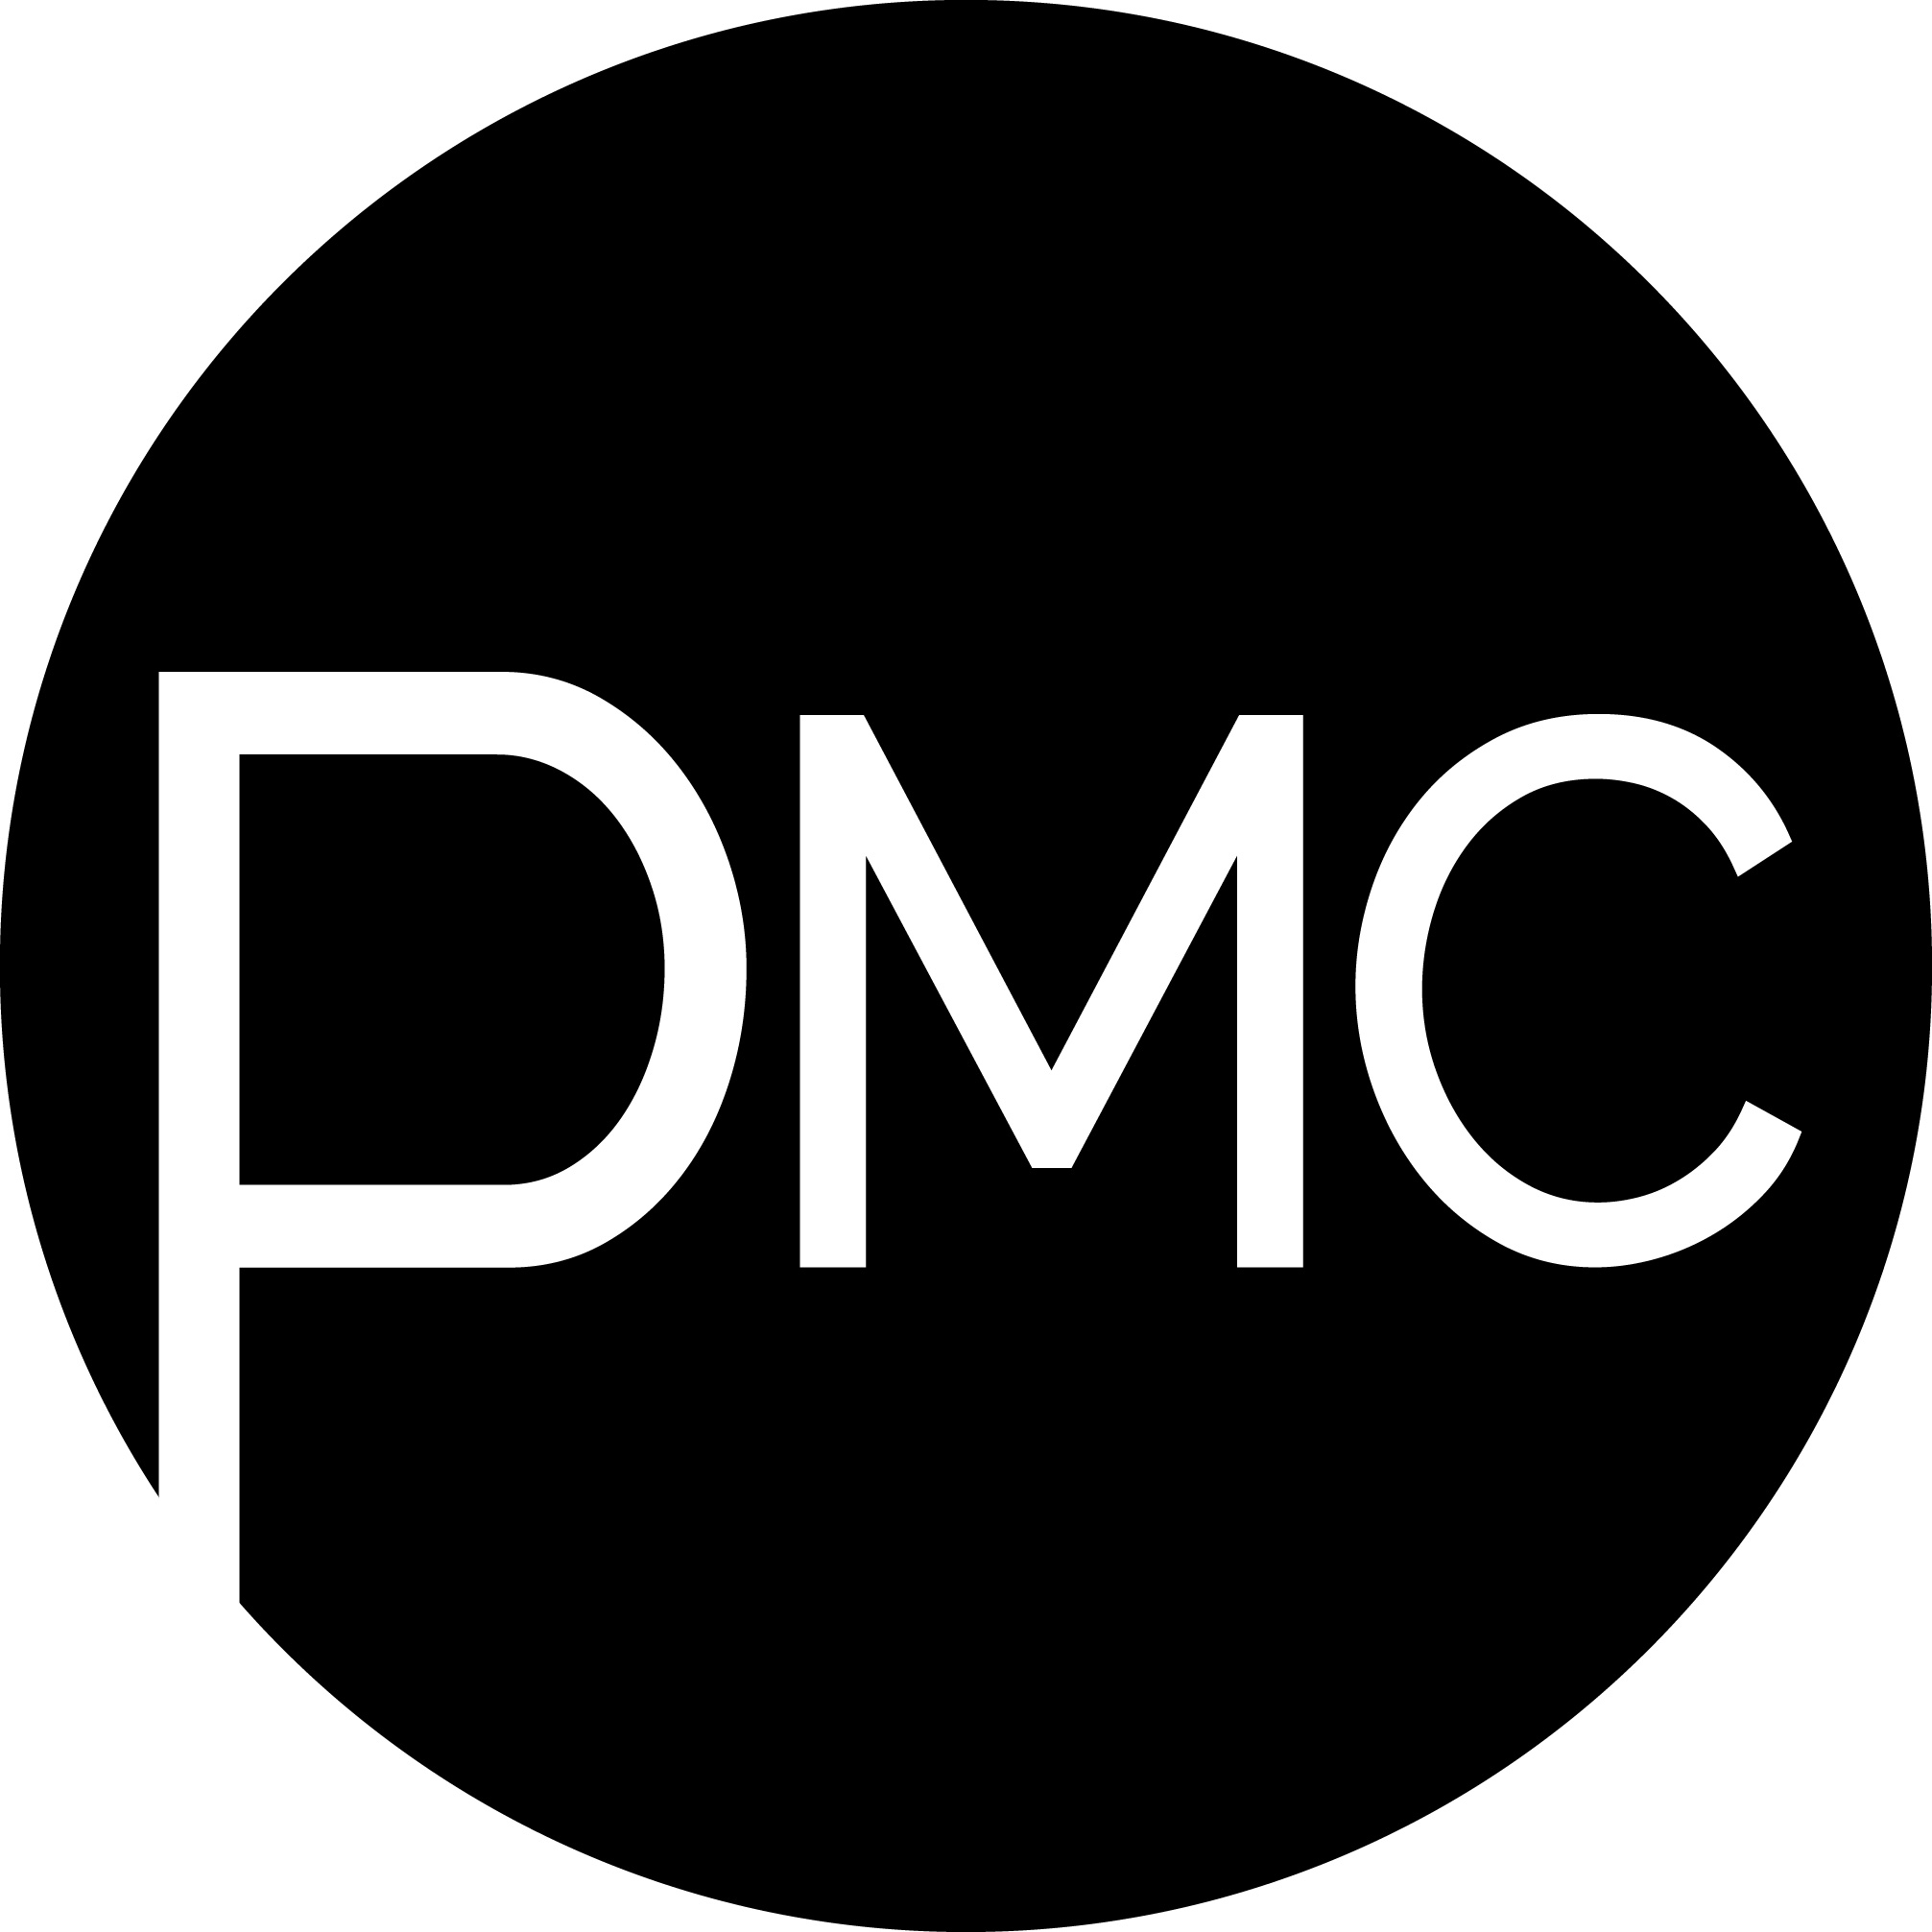 PMC_Logo